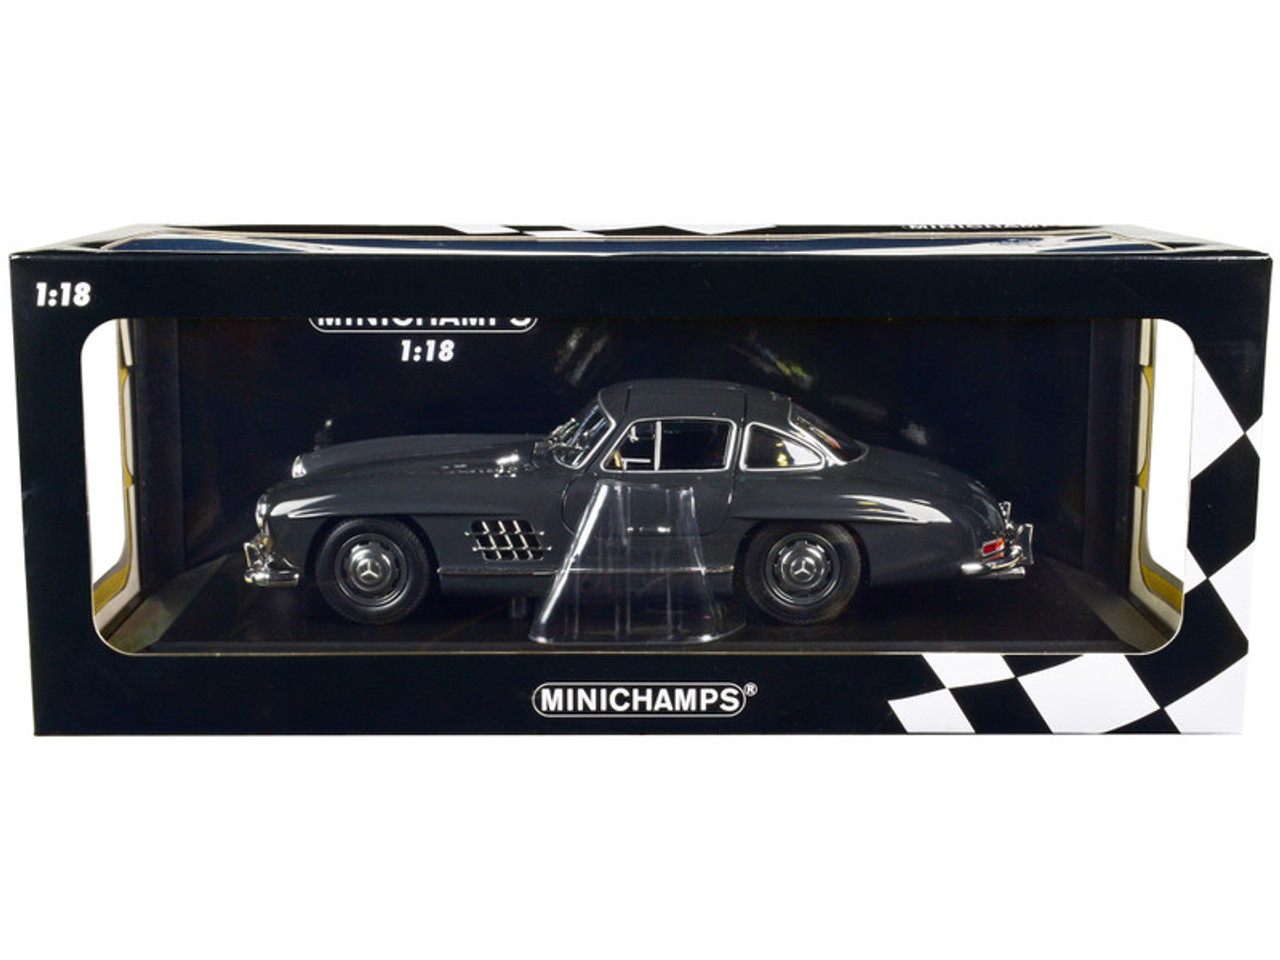 1/18 Minichamps 1955 Mercedes-Benz 300 SL W198 (Dark Gray) Limited Edition 414 Pieces Diecast Car Model